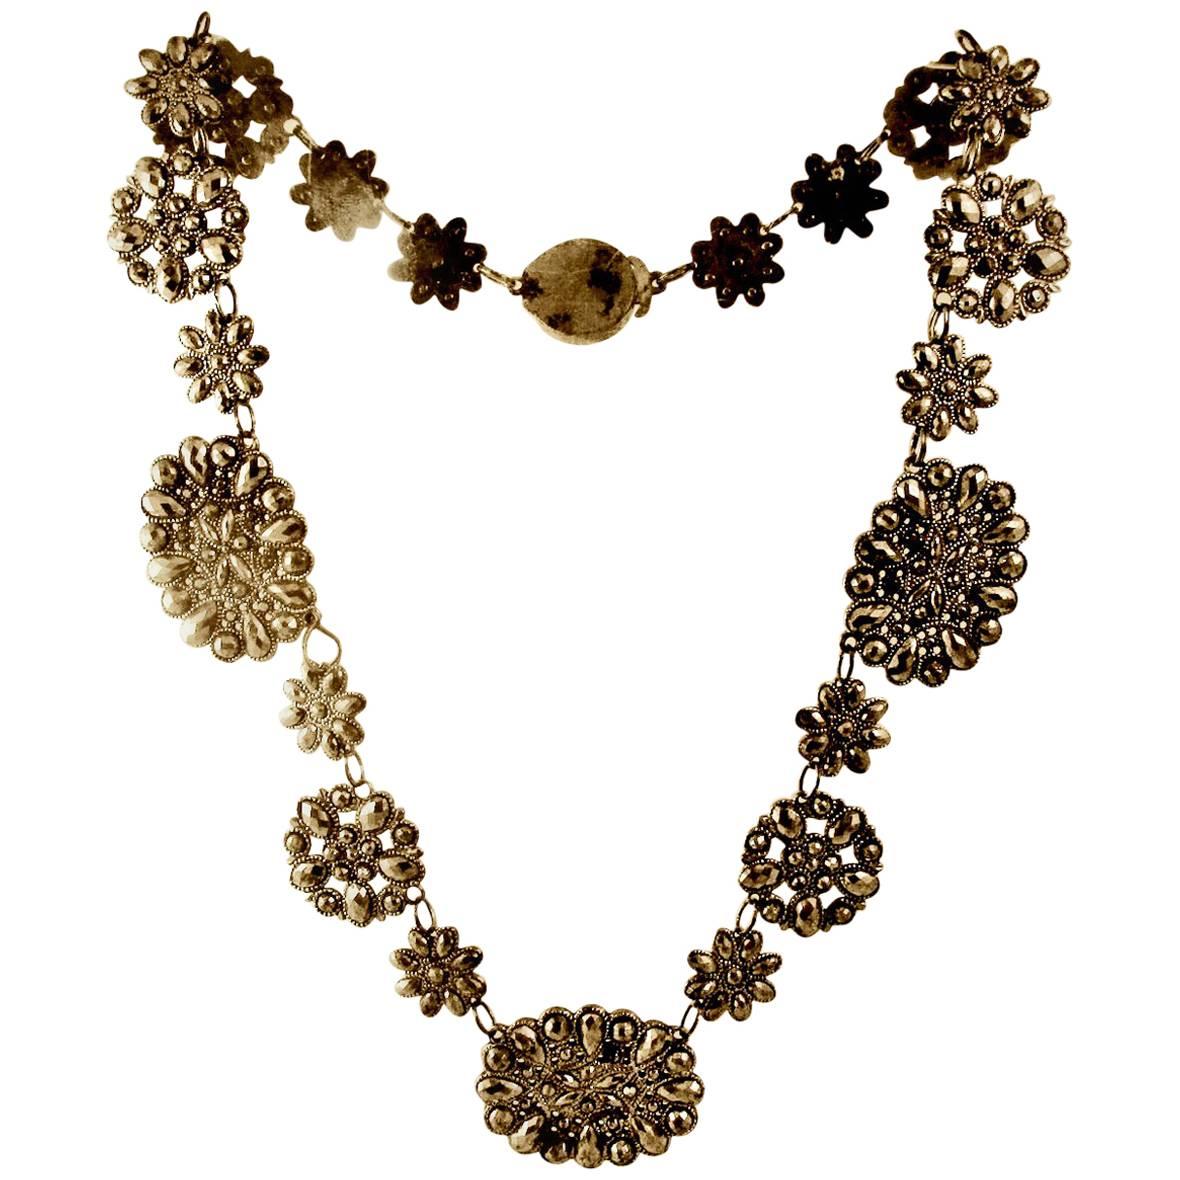 Antique Cut Steel Necklace with a Floral Motif